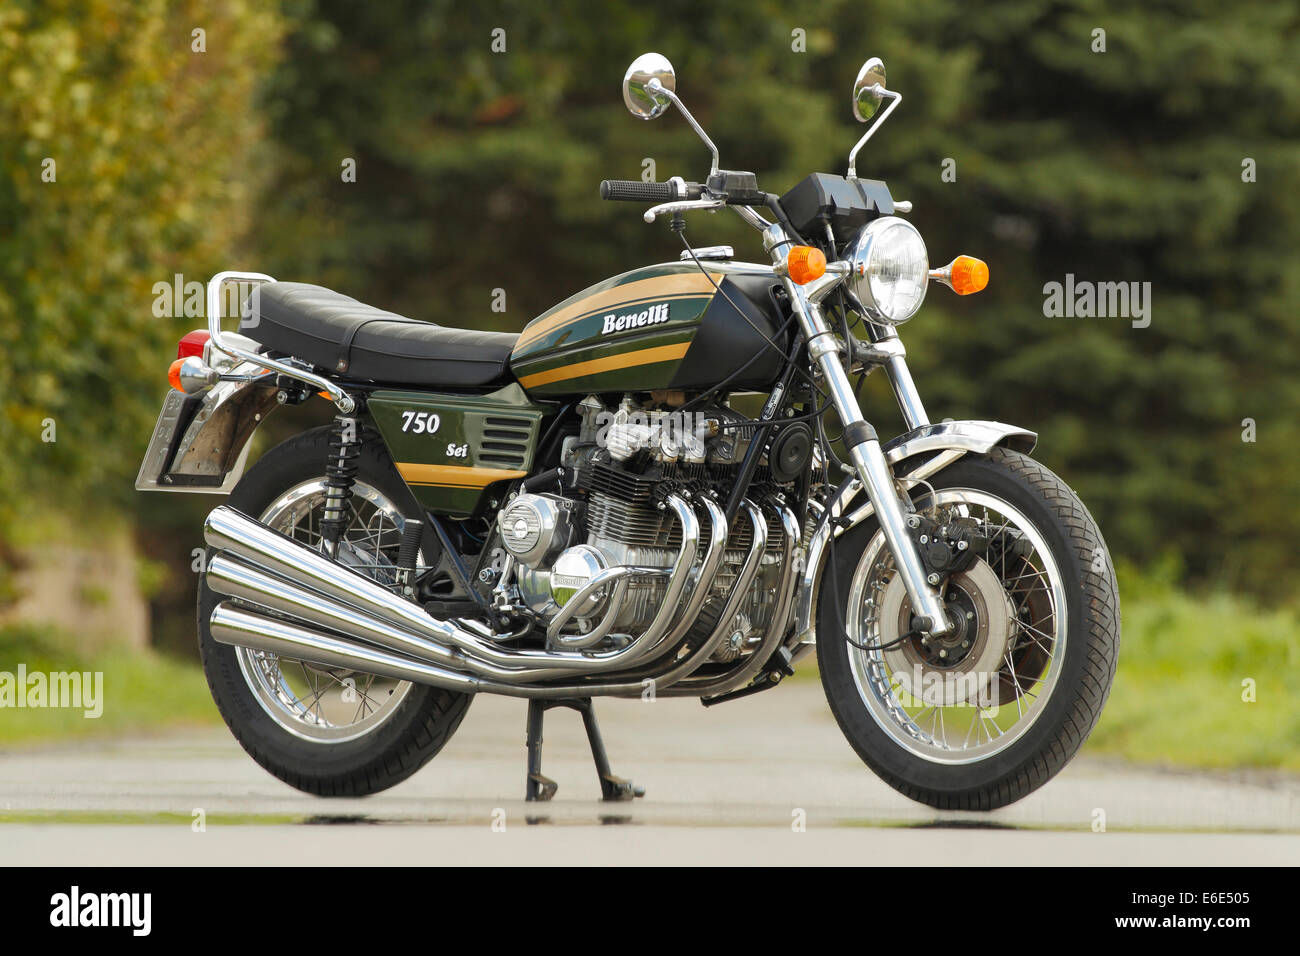 Motorrad, Benelli 750 Sei Stockfotografie - Alamy